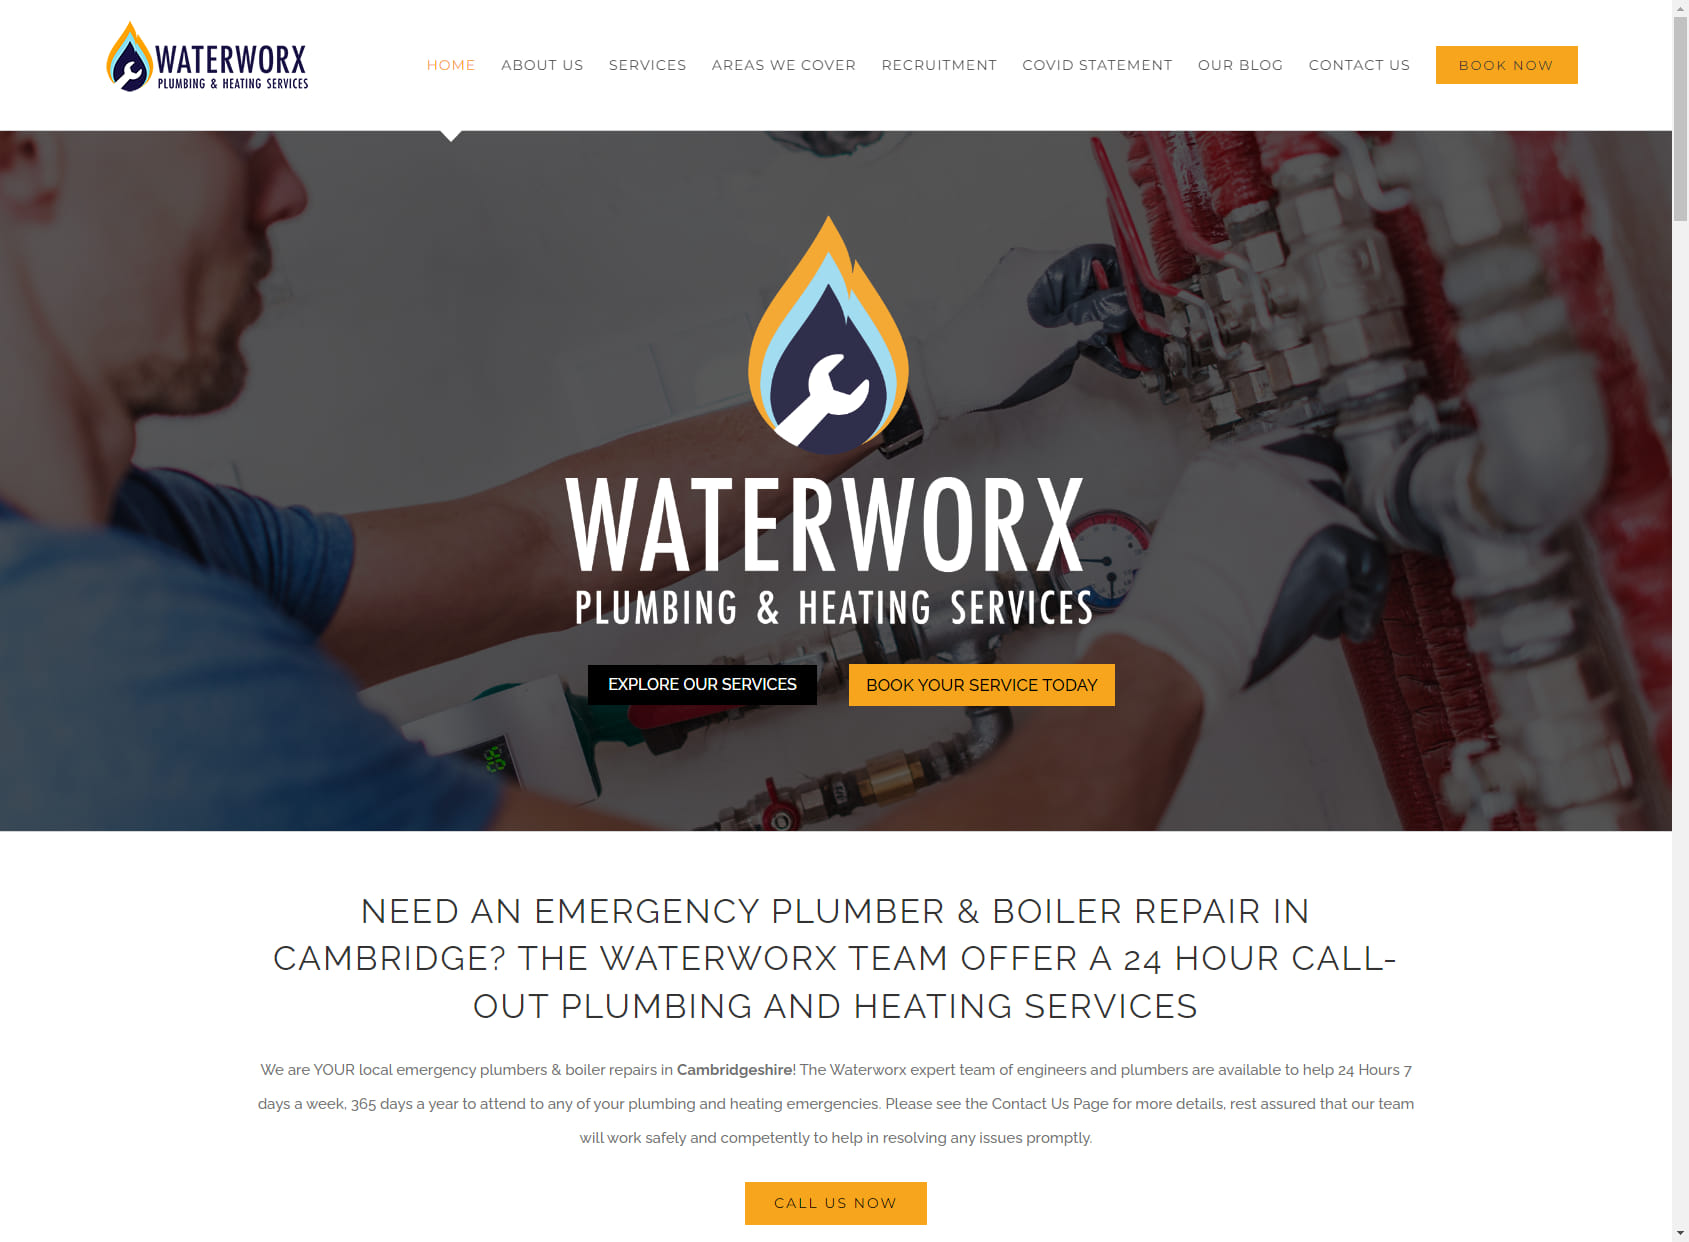 Waterworx Plumbing & Heating Services Ltd